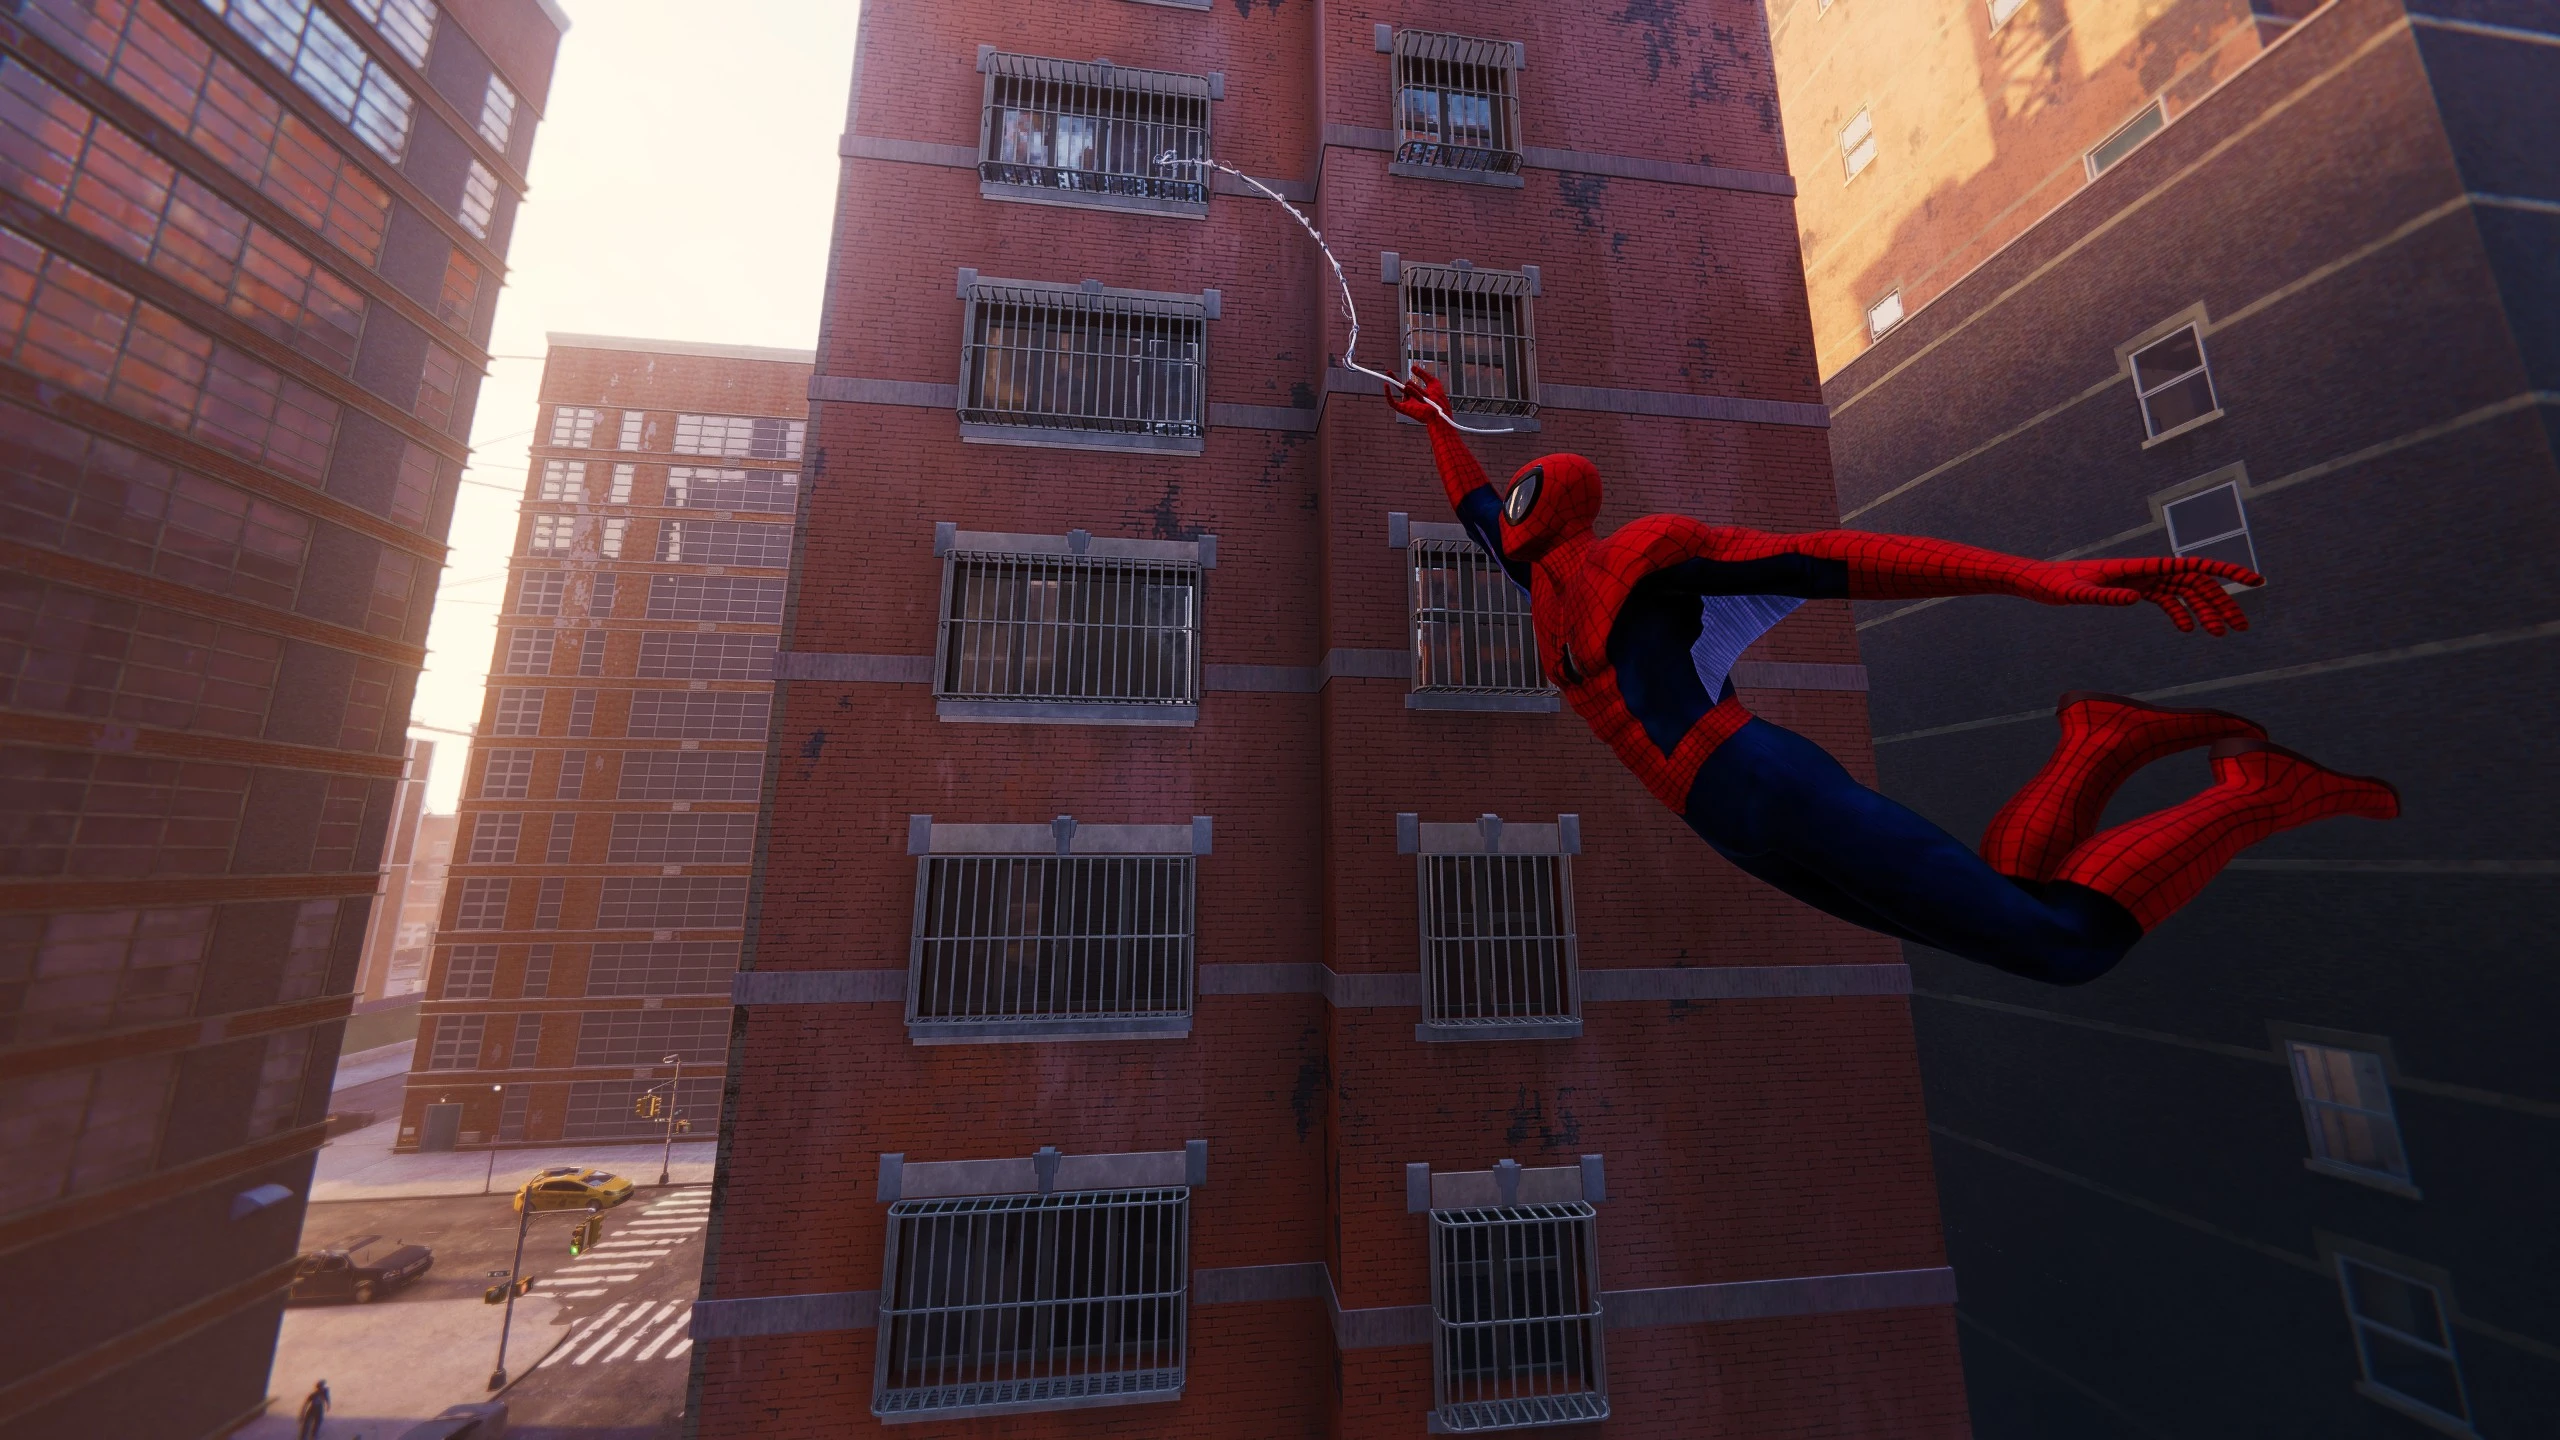 Игра паук 2020. Spider man Remastered. Spider-man 2 (игра). Человек-паук 2 игра на ps5. Marvel’s Spider-man Remastered Gameplay.